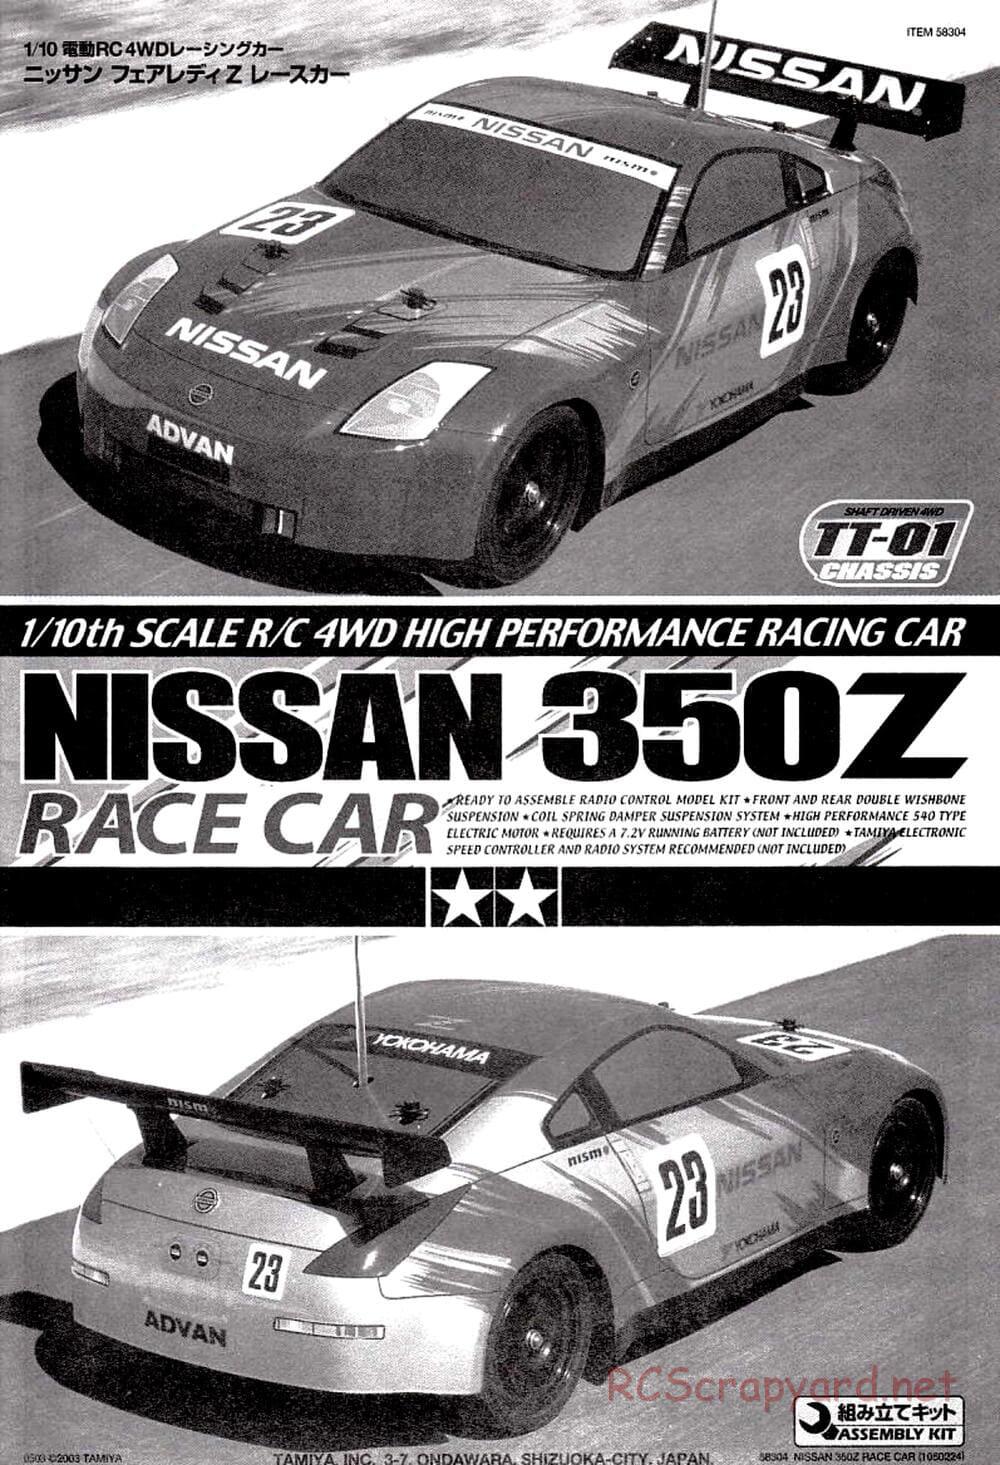 Tamiya - Nissan 350Z Race-Car - TT-01 Chassis - Manual - Page 1